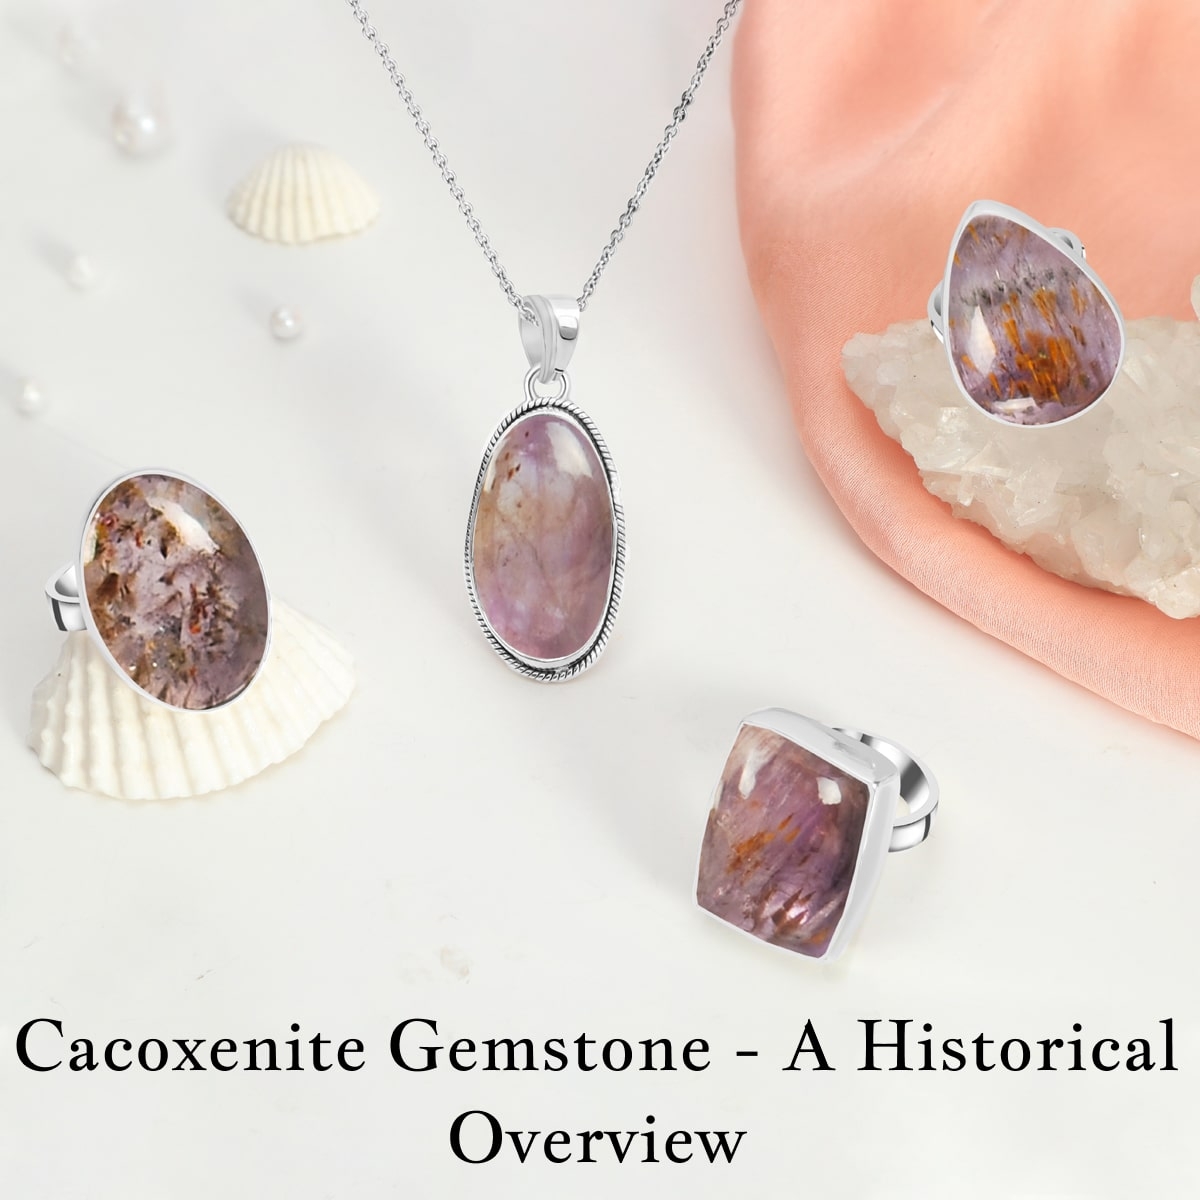 History of Cacoxenite Gemstone